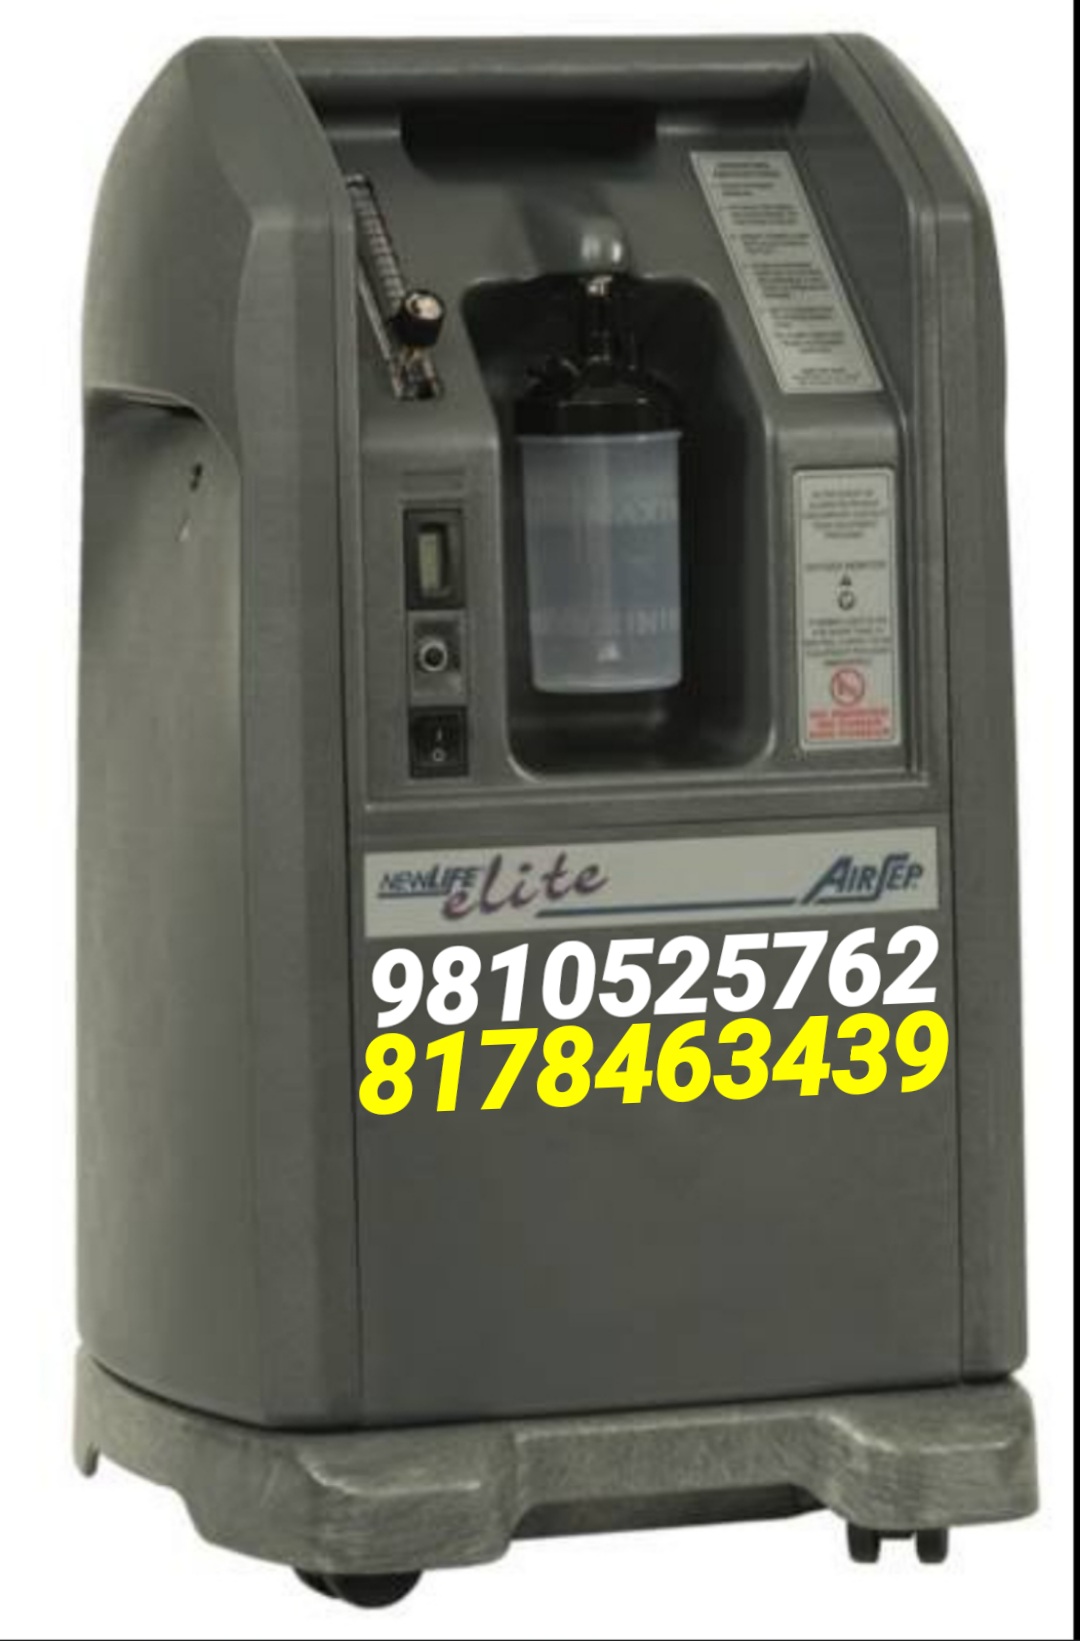 Oxygen Machine Hire Preet Vihar 9810525762